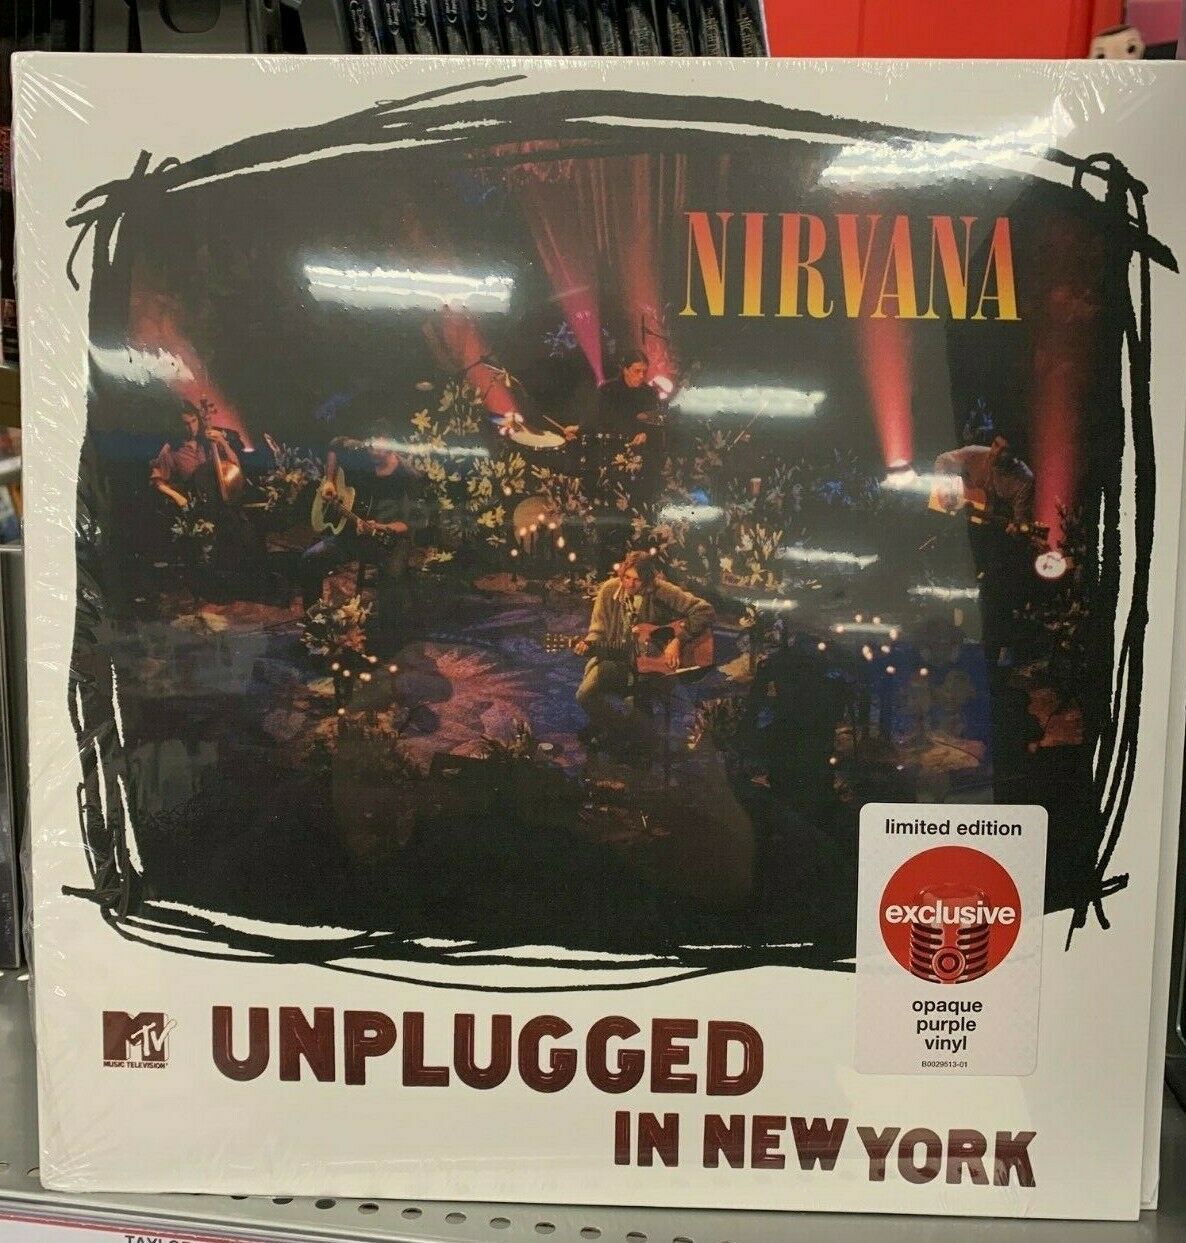 nirvana unplugged vinyl 25th anniversary